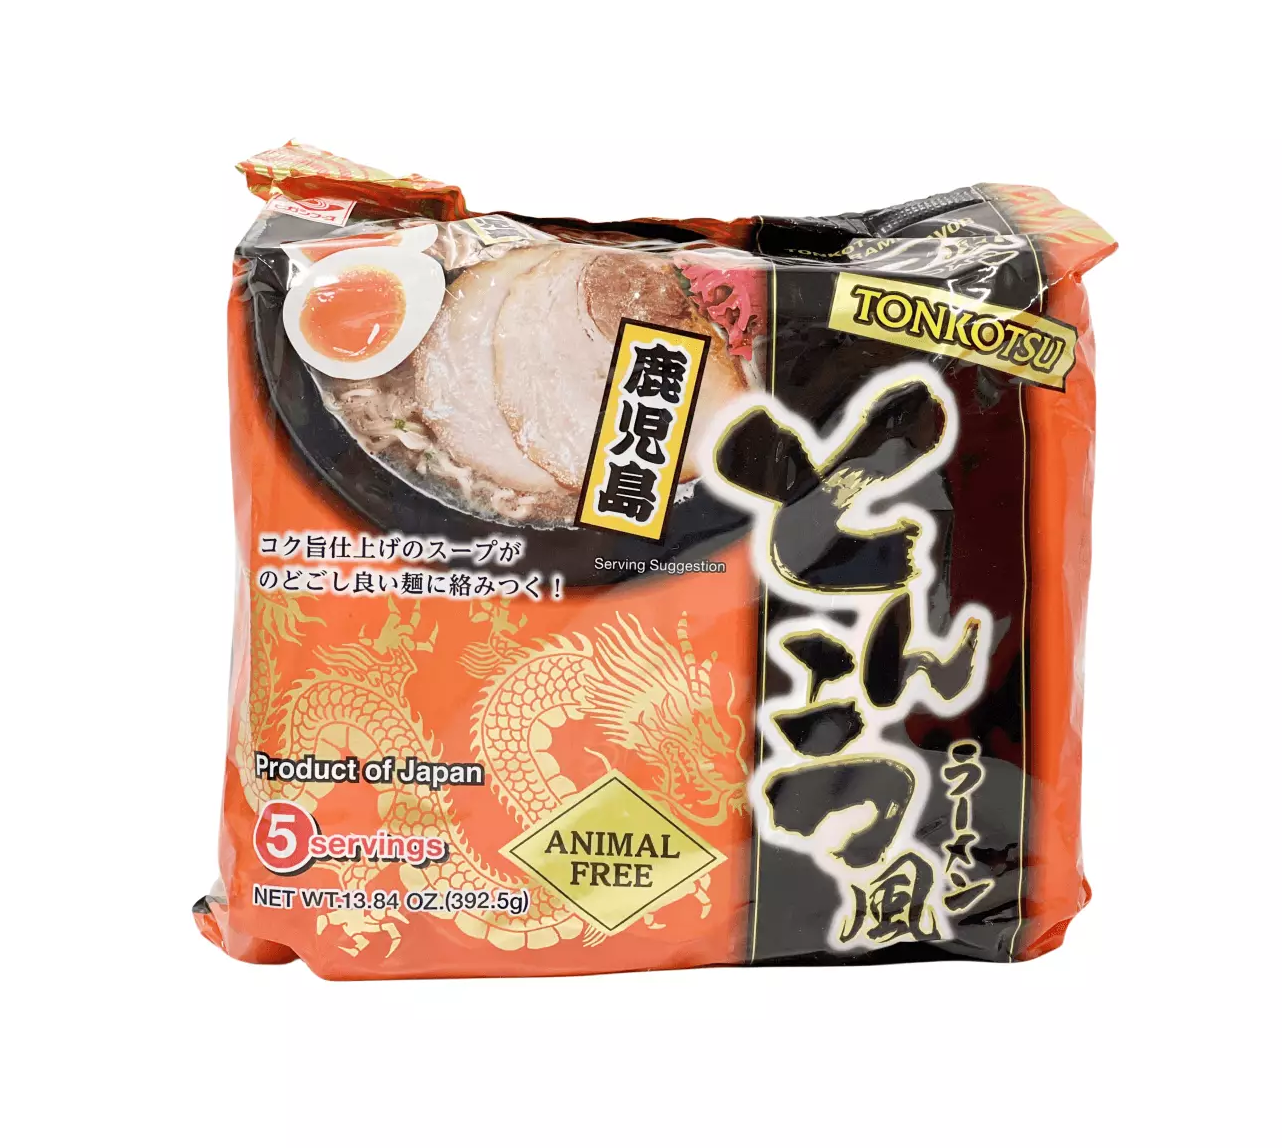 Instant Noodles Ramen Tonkotsu Flavour Kagoshima 392.5g Higashimaru Japan